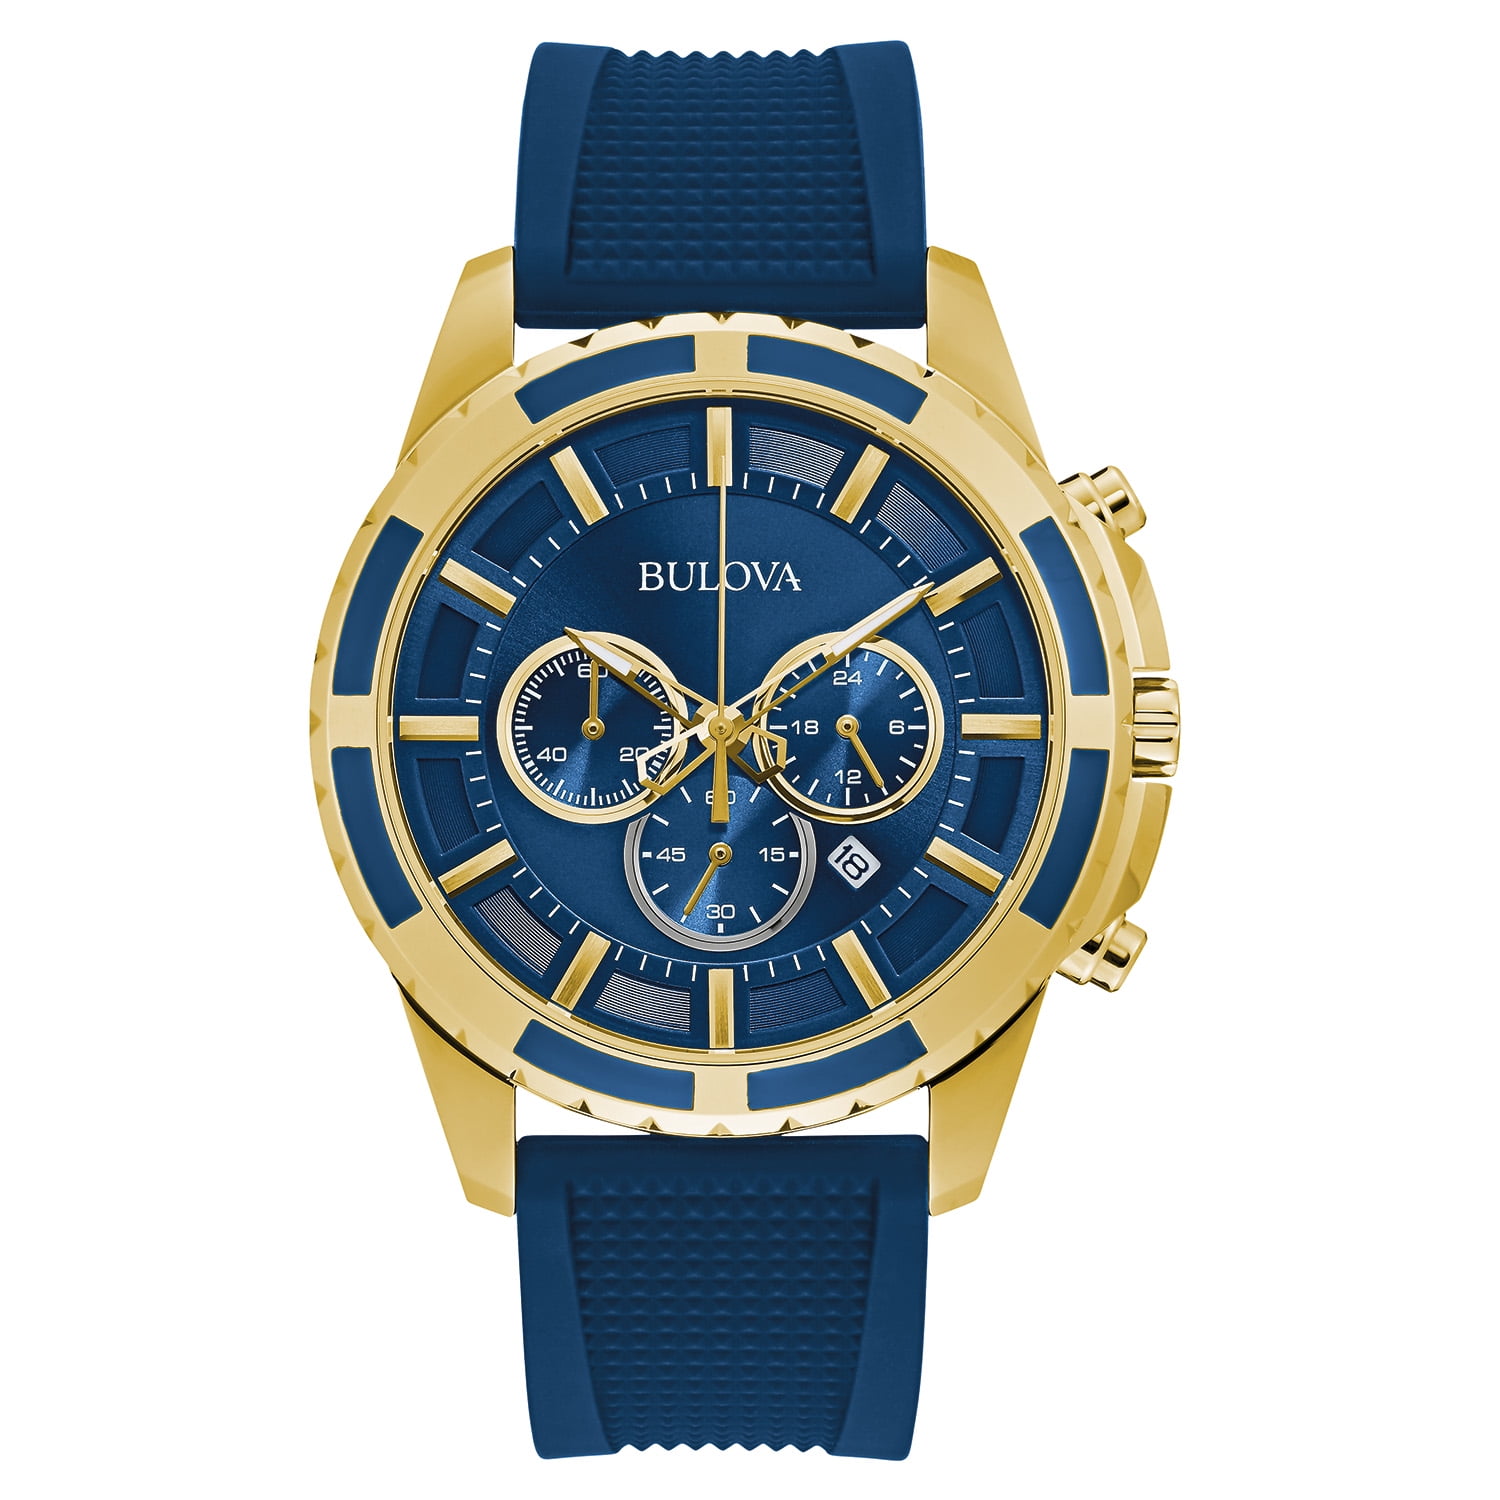 Bulova Men's Chronograph Watch, Blue Silicone Strap 97B193 